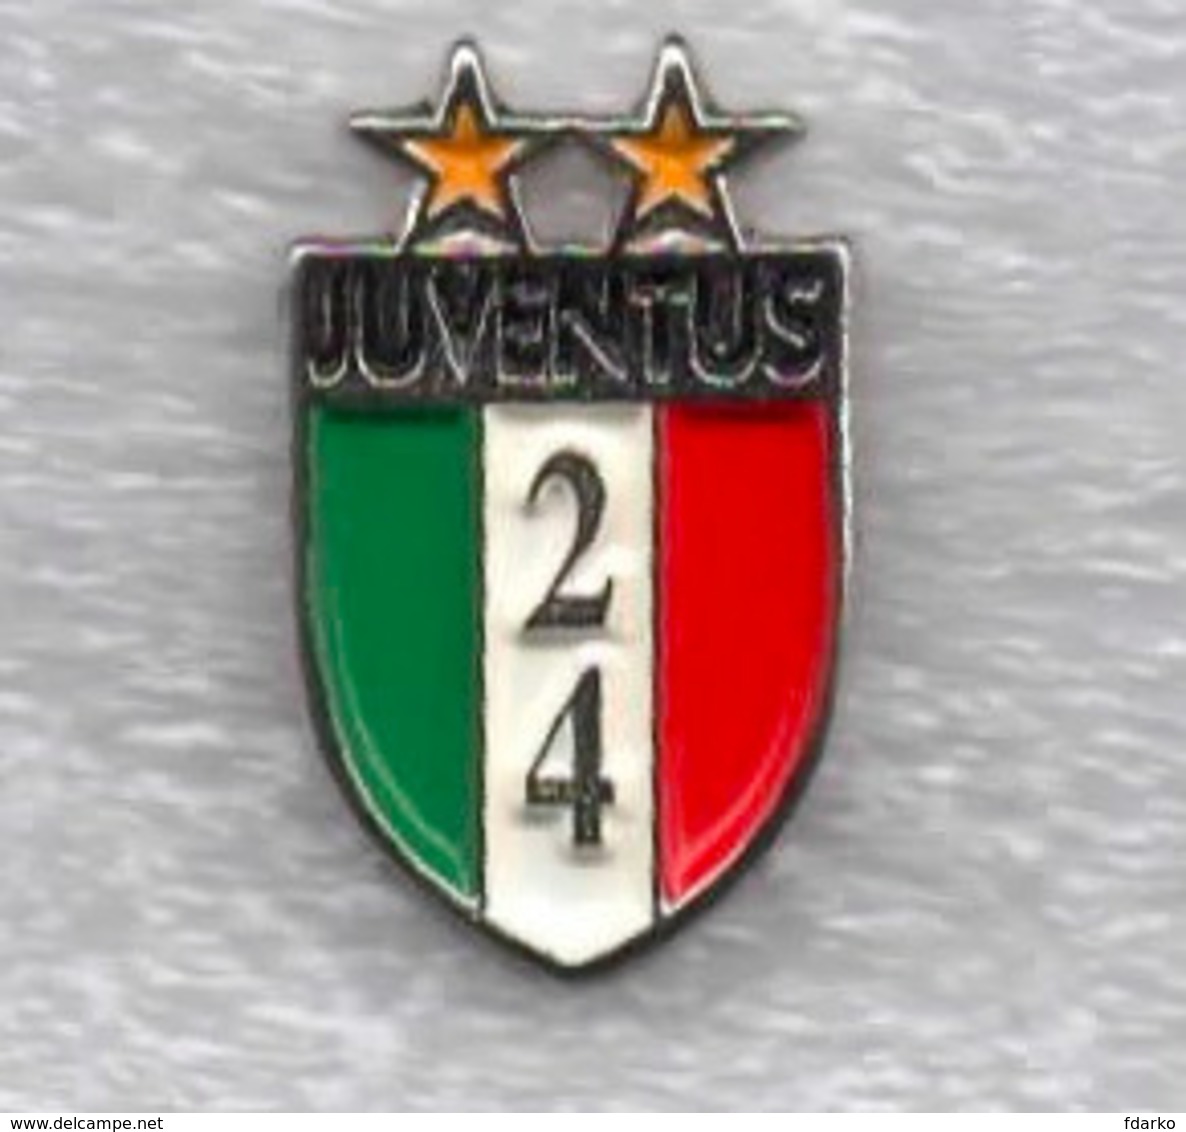 Juventus Torino Calcio 24° Scudetto Juve Ufficiale Giemme Torino Soccer Pins Spilla Italy Toro Granata - Calcio